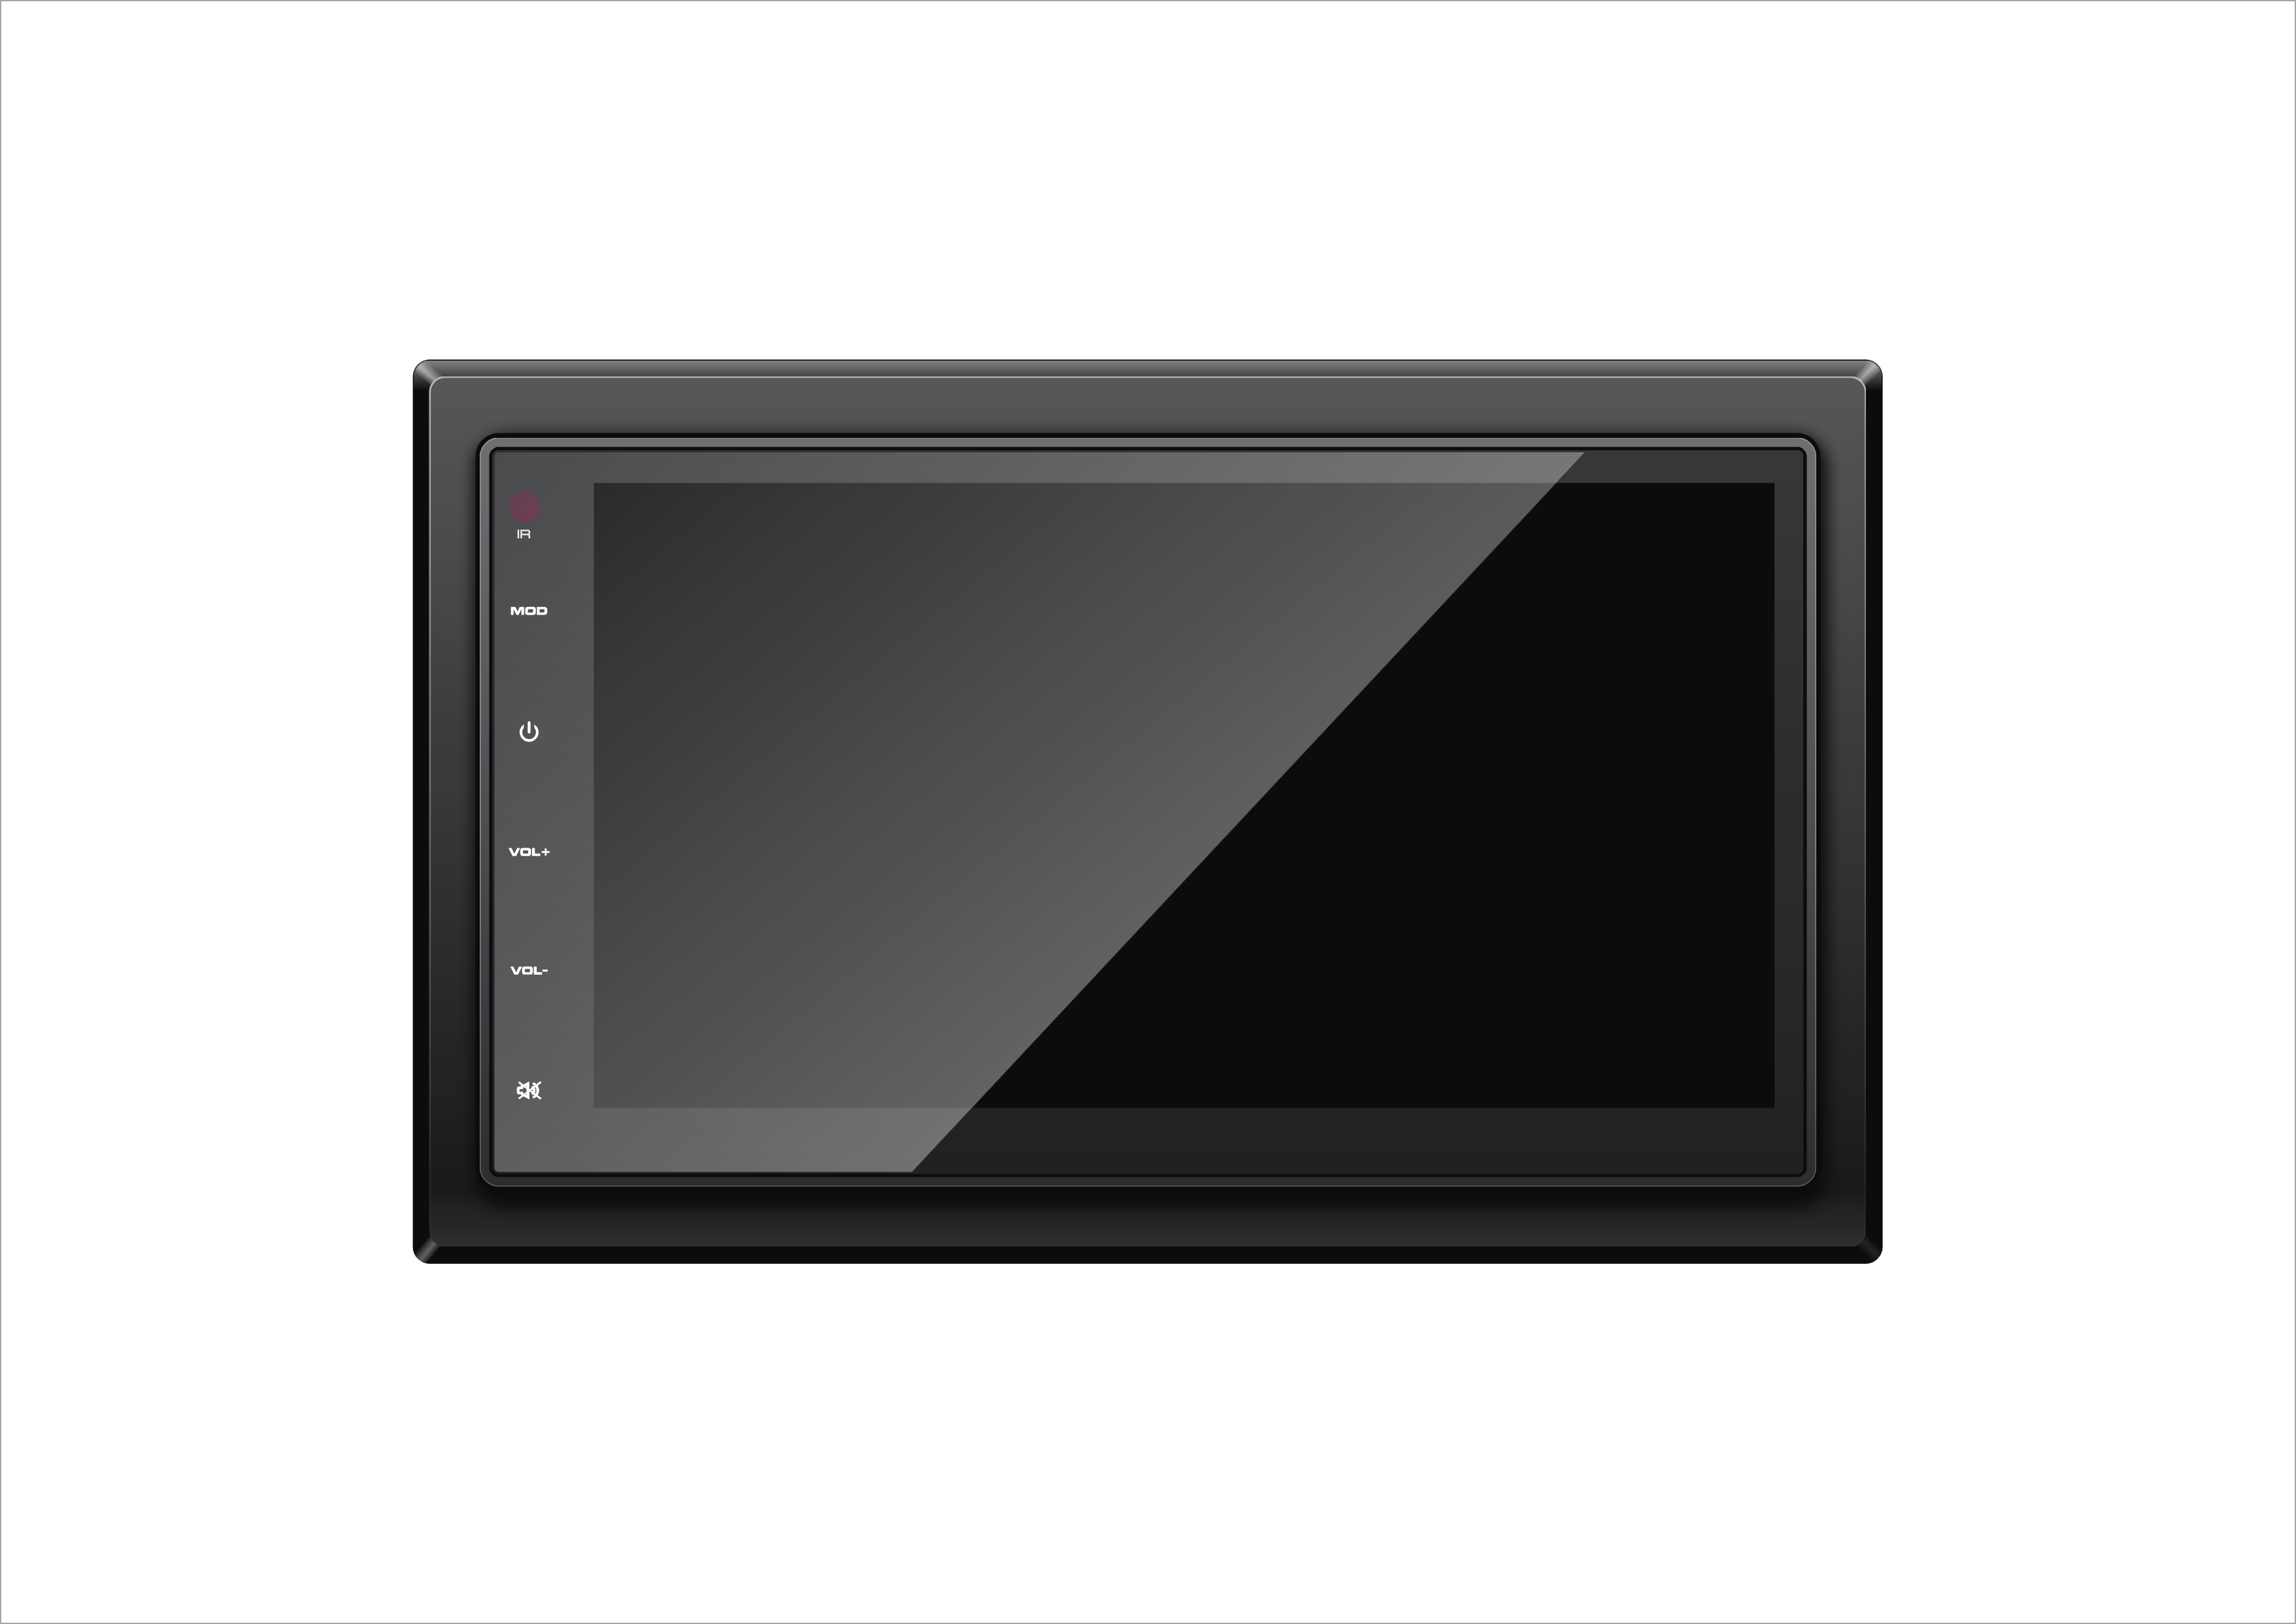 Multimedia Player